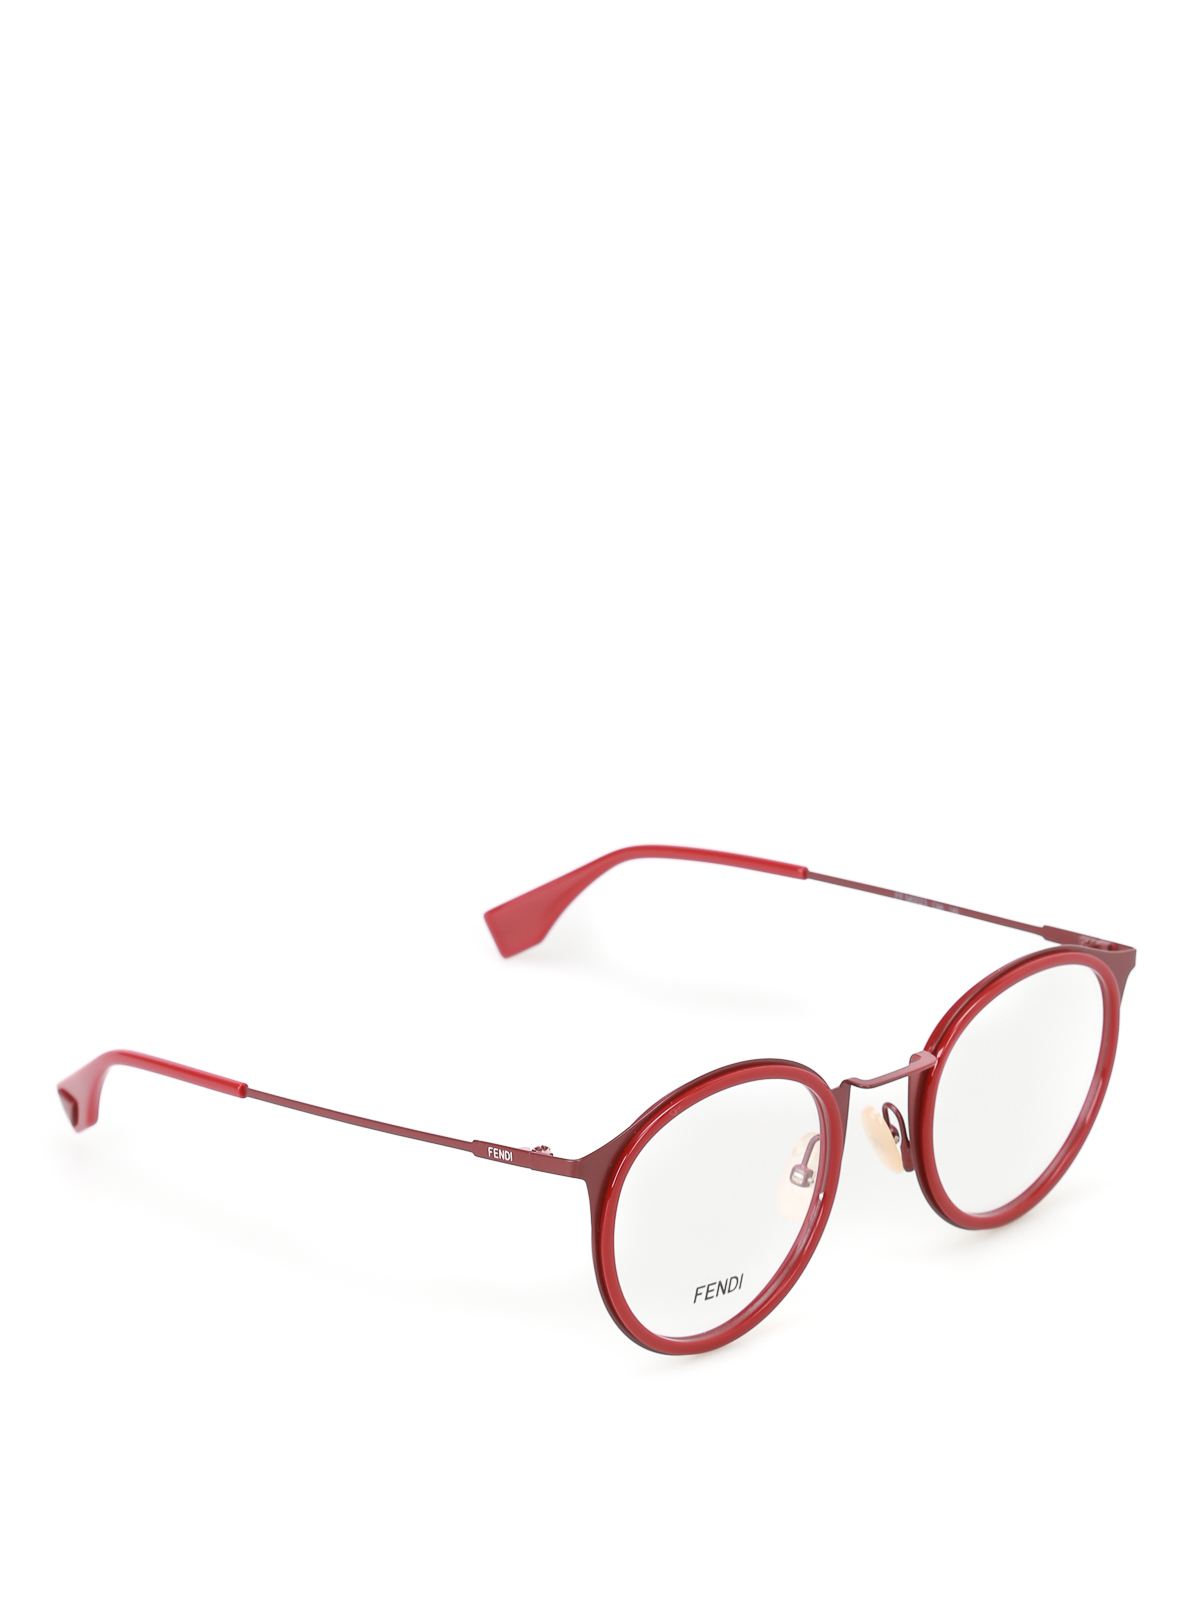 Fendi - Red metal optical glasses 